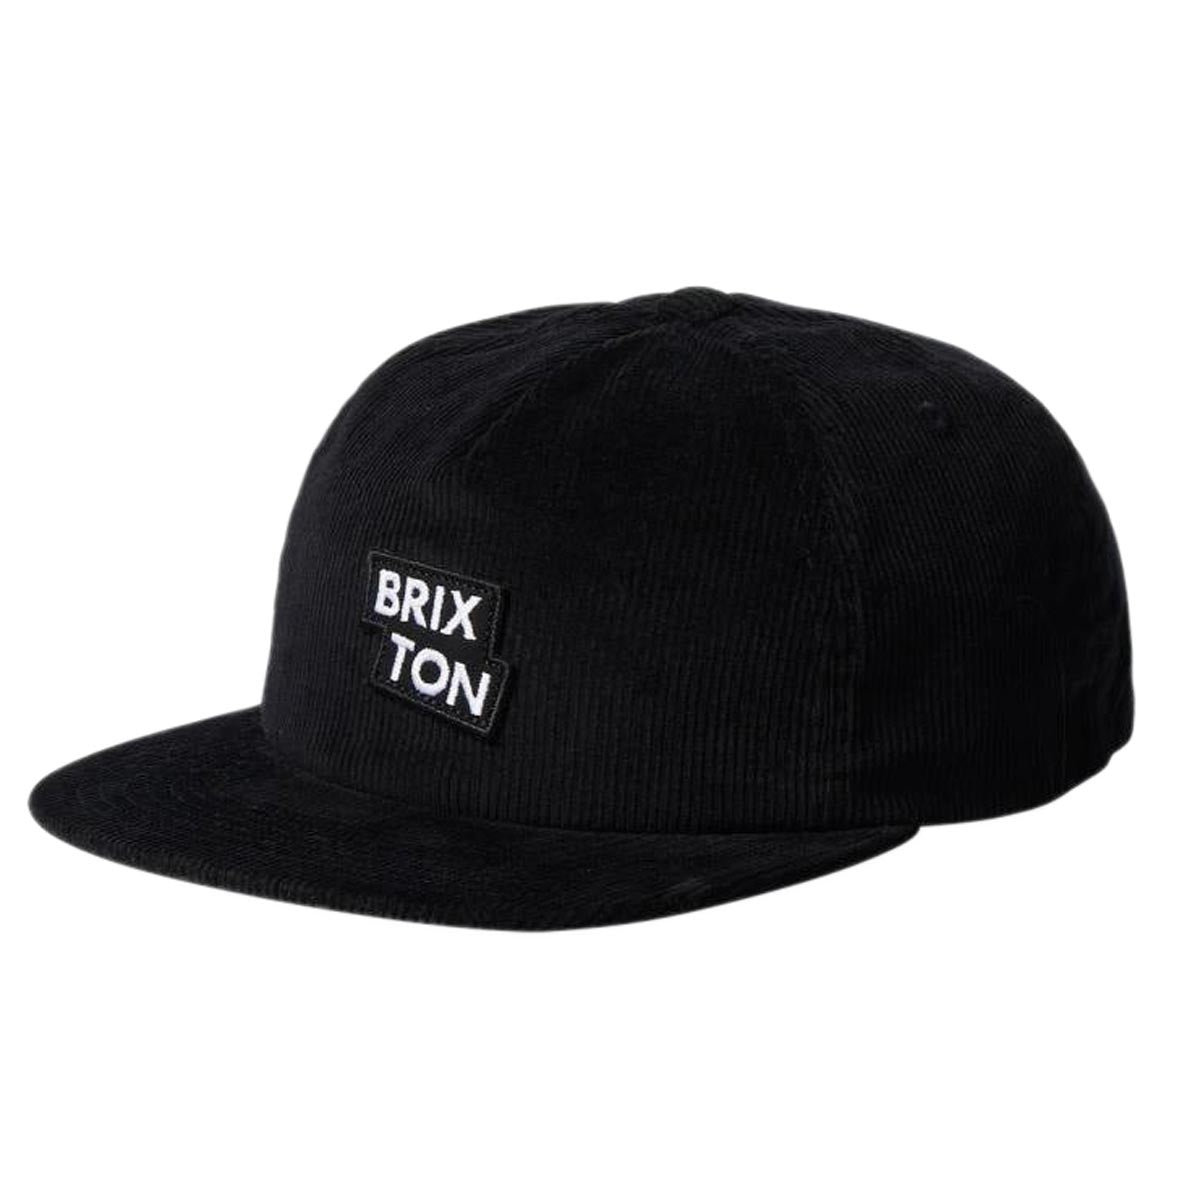 Brixton Team Mp Snapback Hat - Black image 1